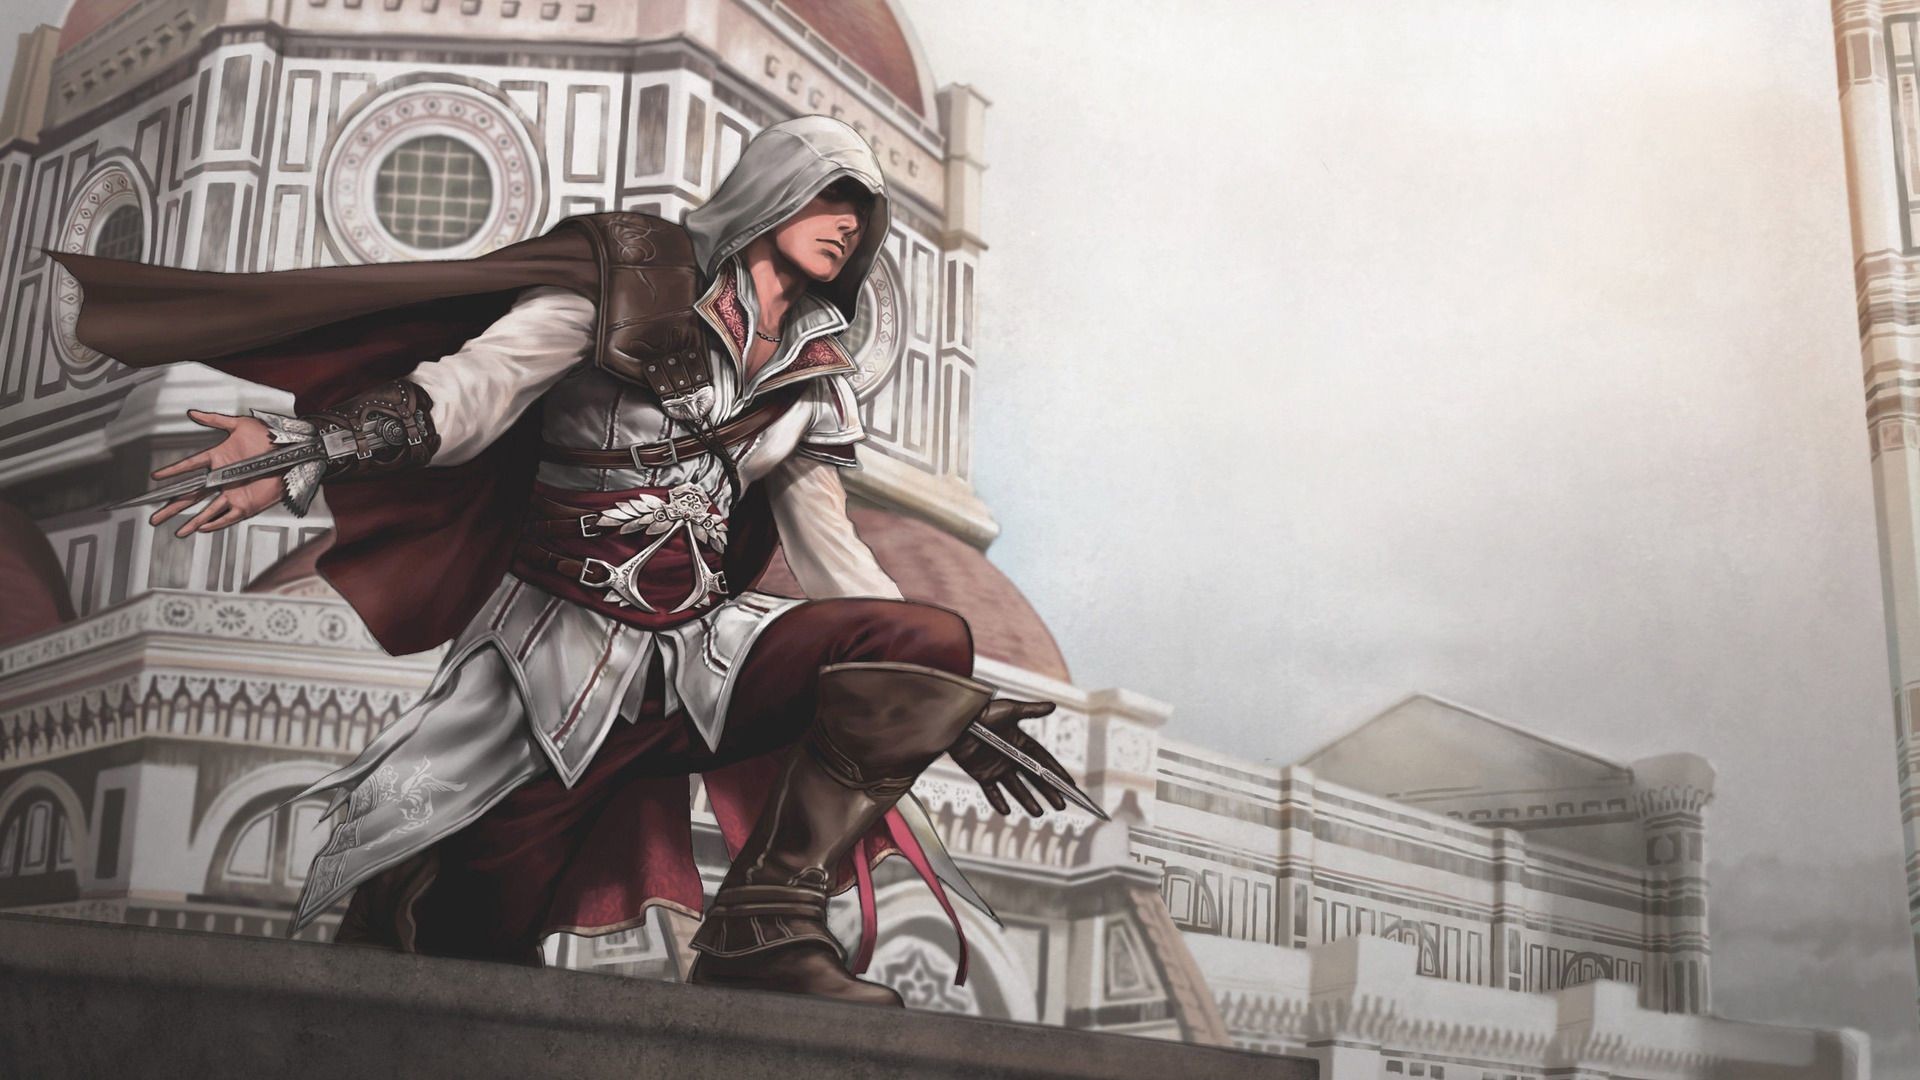 1920x1080 Ezio HD Wallpapers Backgrounds Wallpaper 1920Ã1080 Assassin's Creed II  Wallpapers (41 Wallpapers) | Adorable Wallpapers